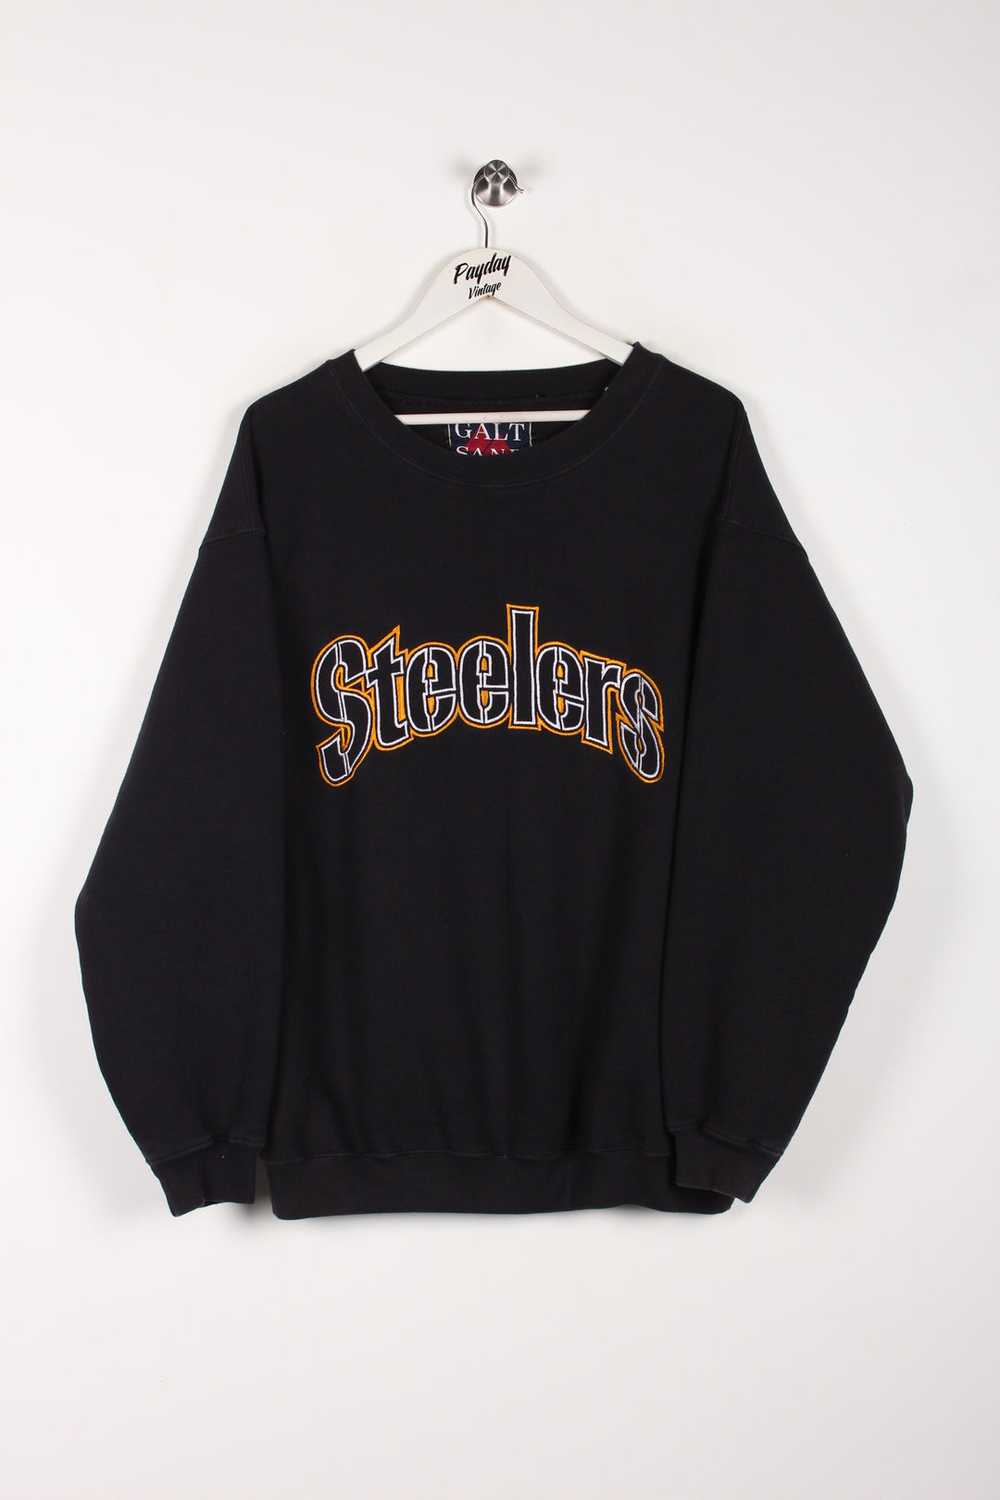 90's Steelers Heavyweight Sweatshirt Black XL - image 1